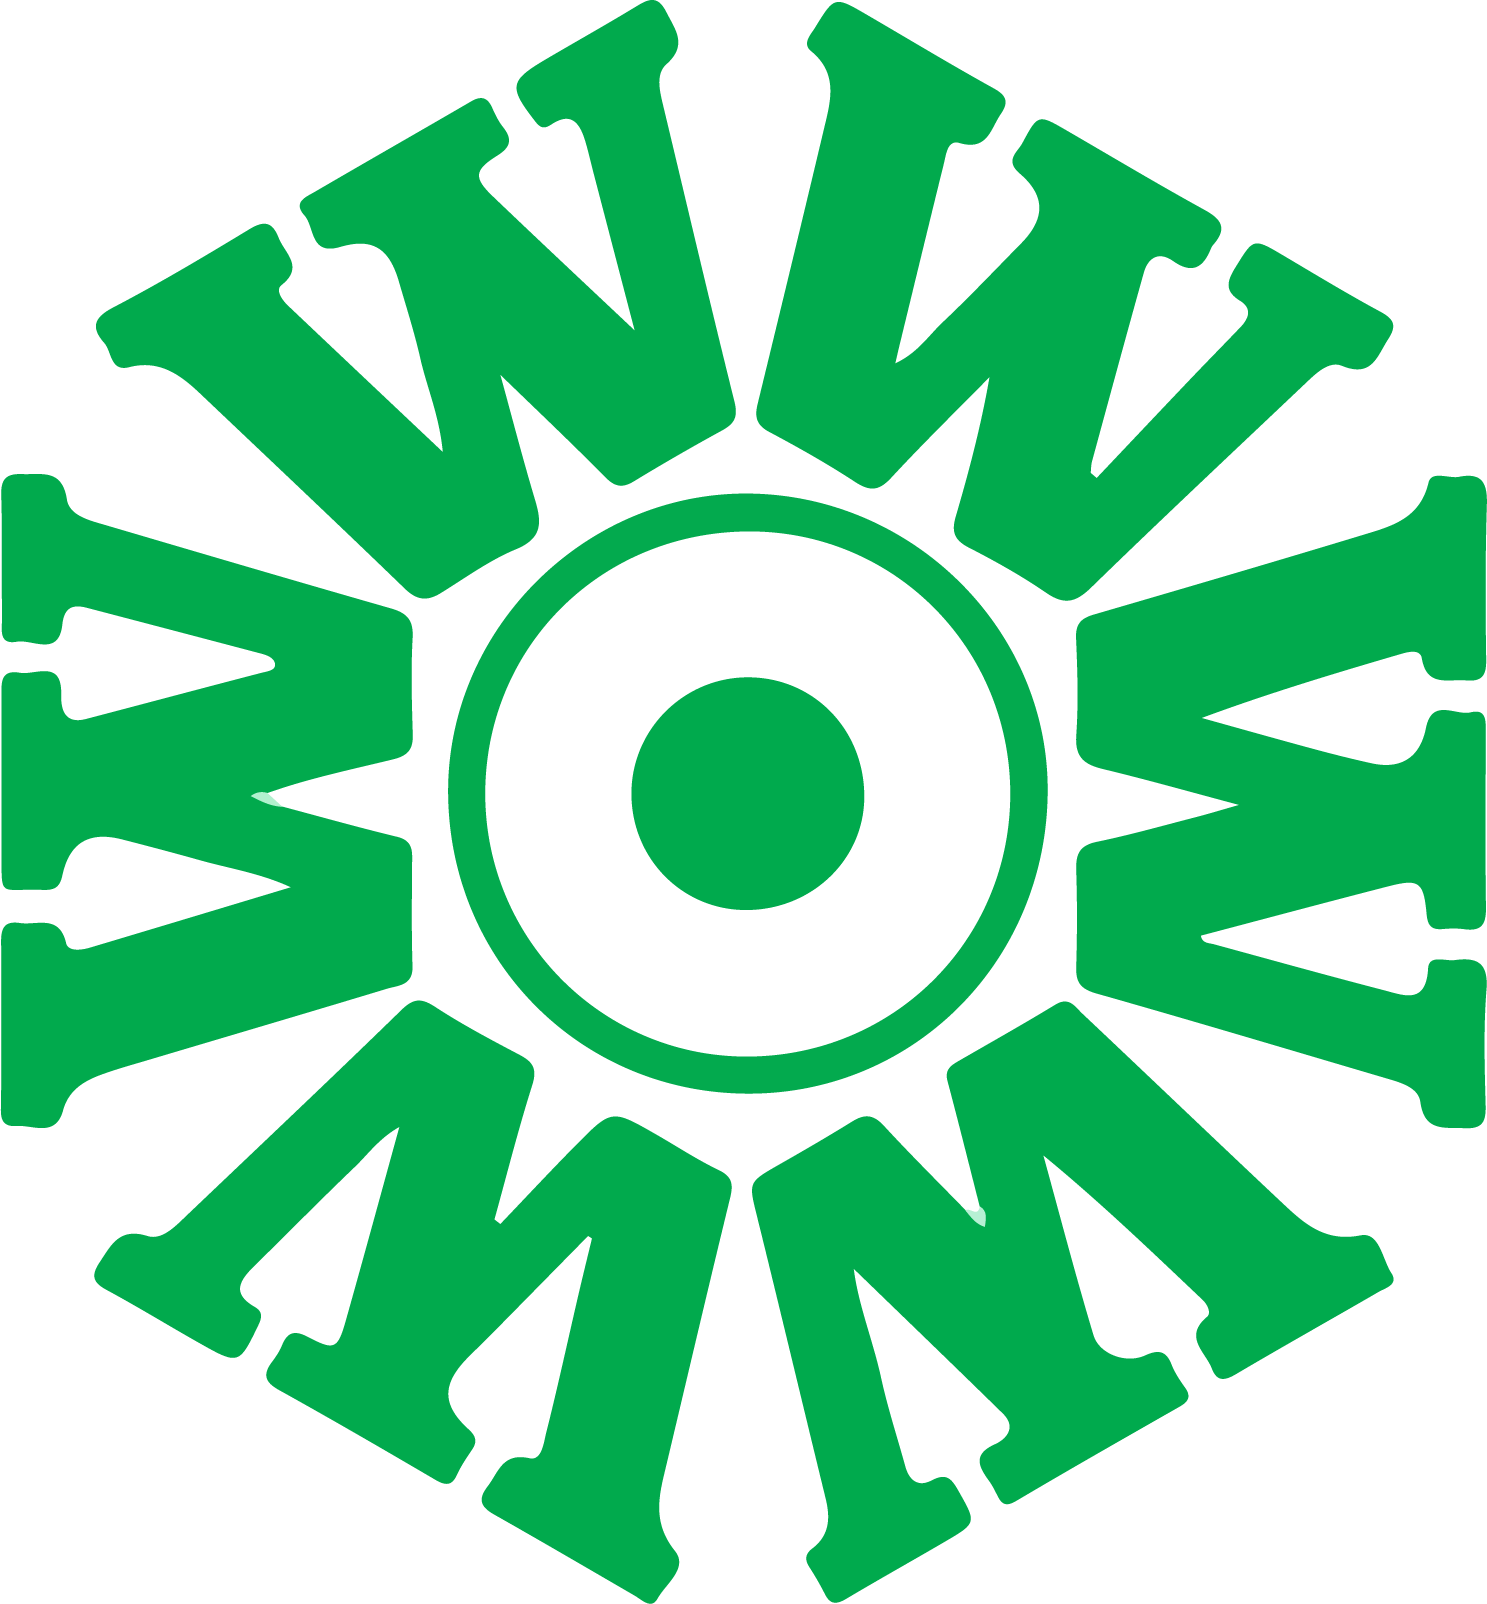 West Coast Paper Mills logo (PNG transparent)